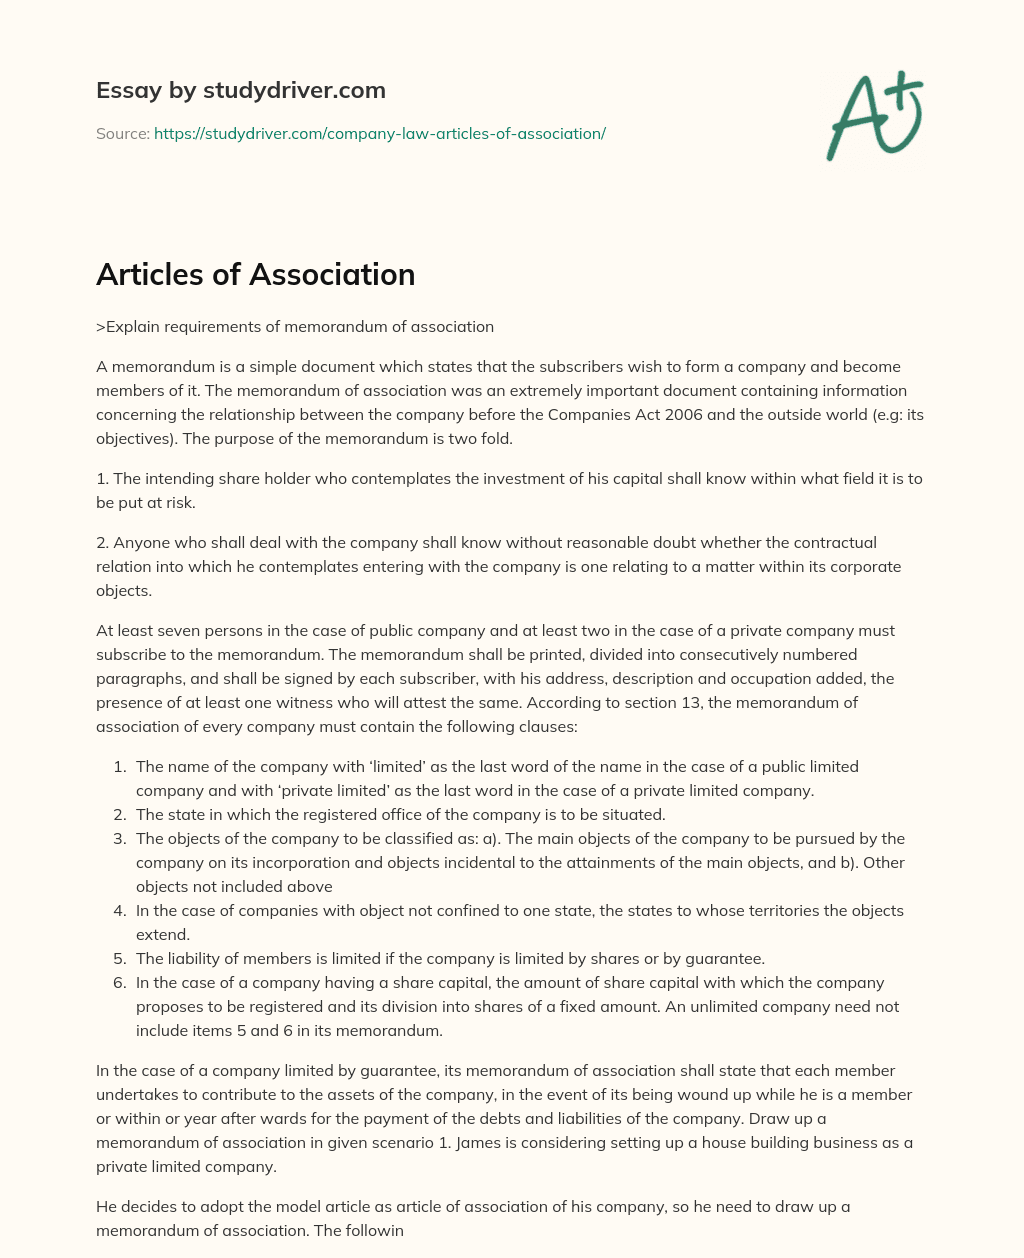 Articles of Association essay